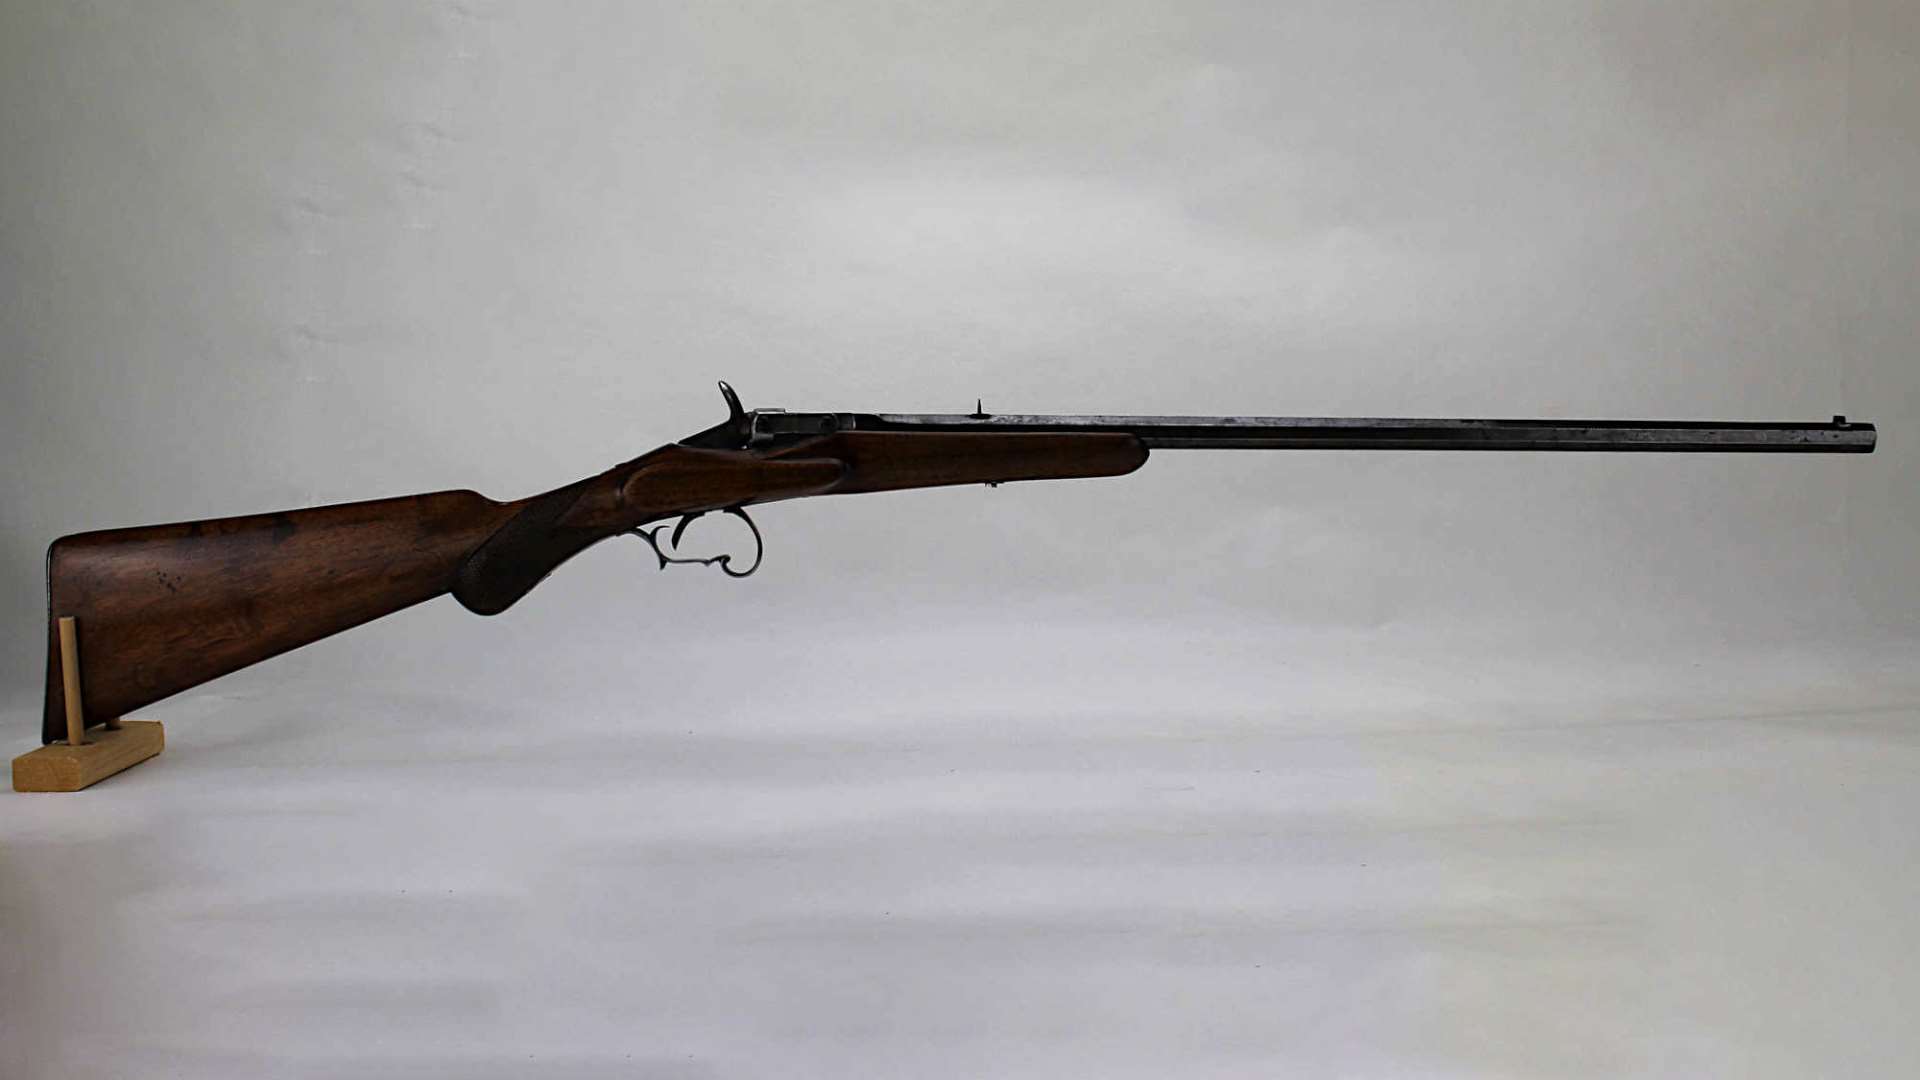 Example of a Flobert gun